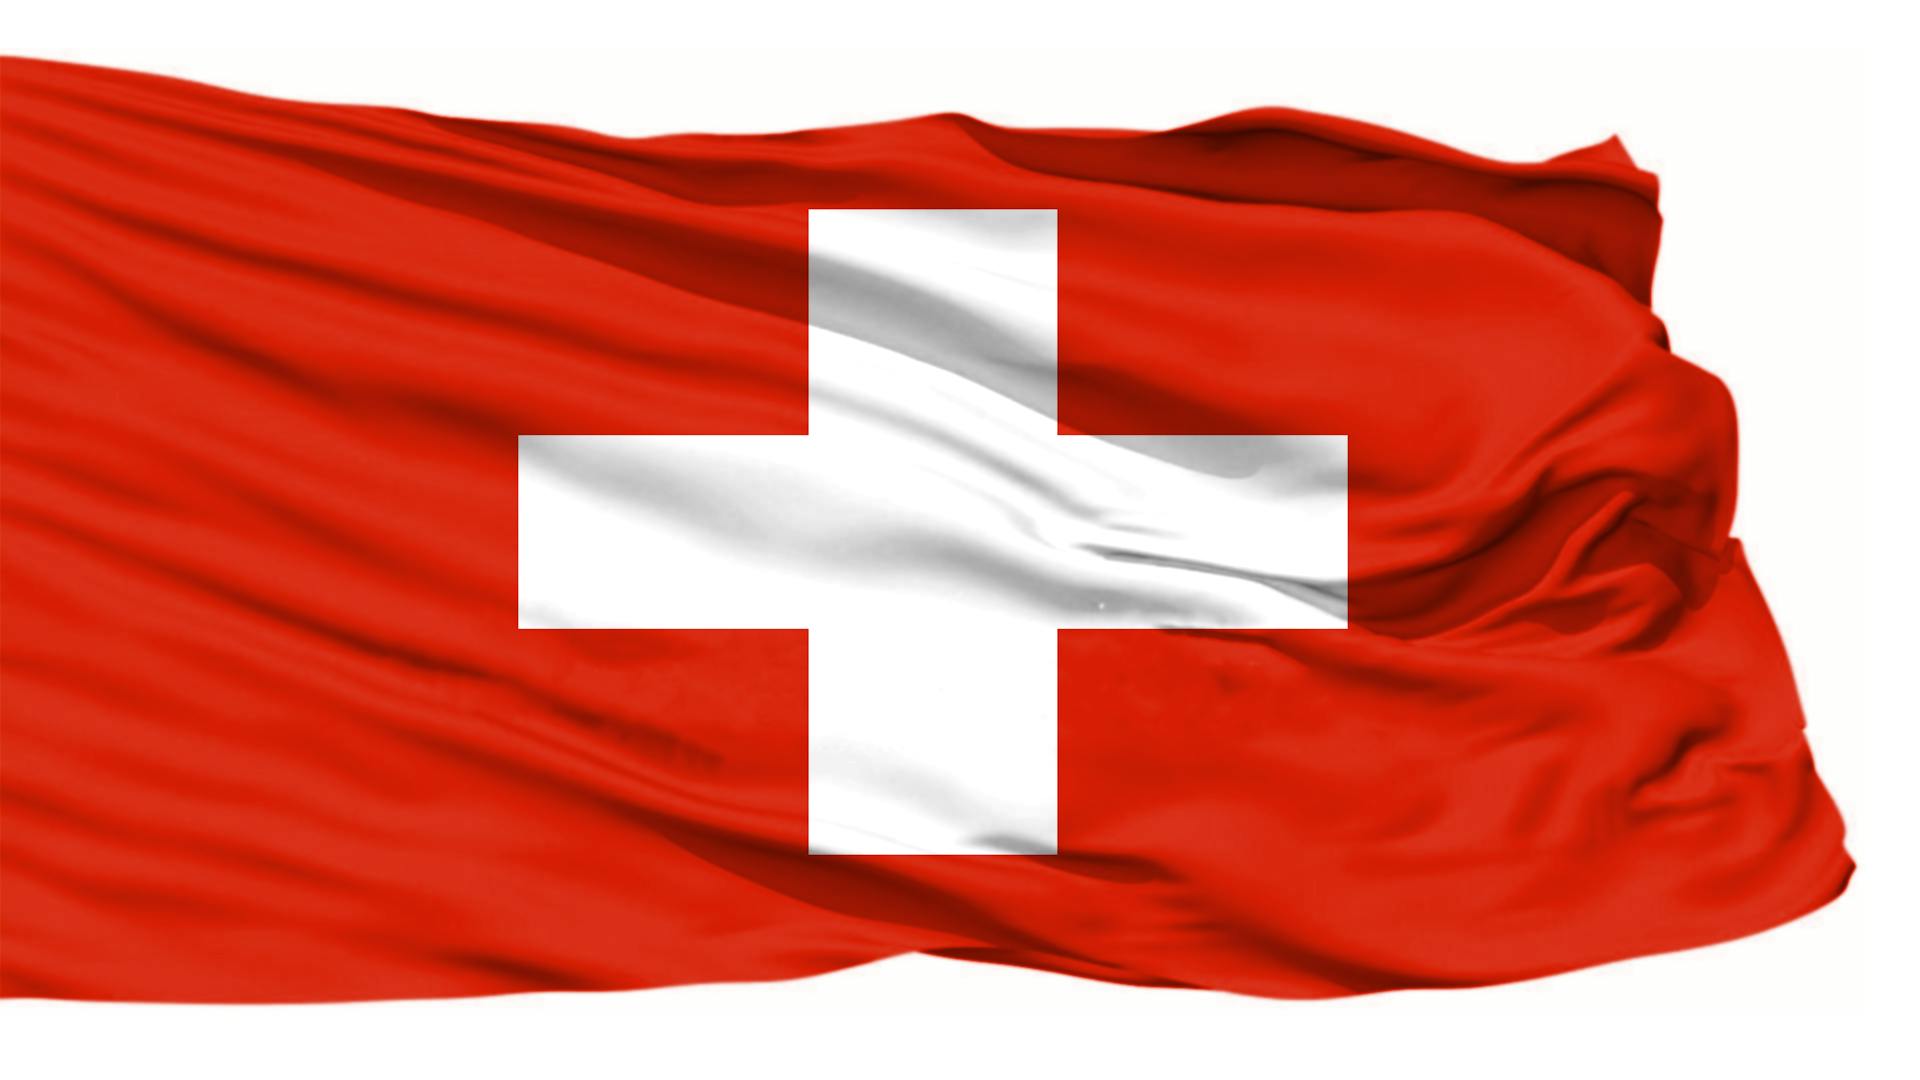 Free stock photo of Switzerland Flag